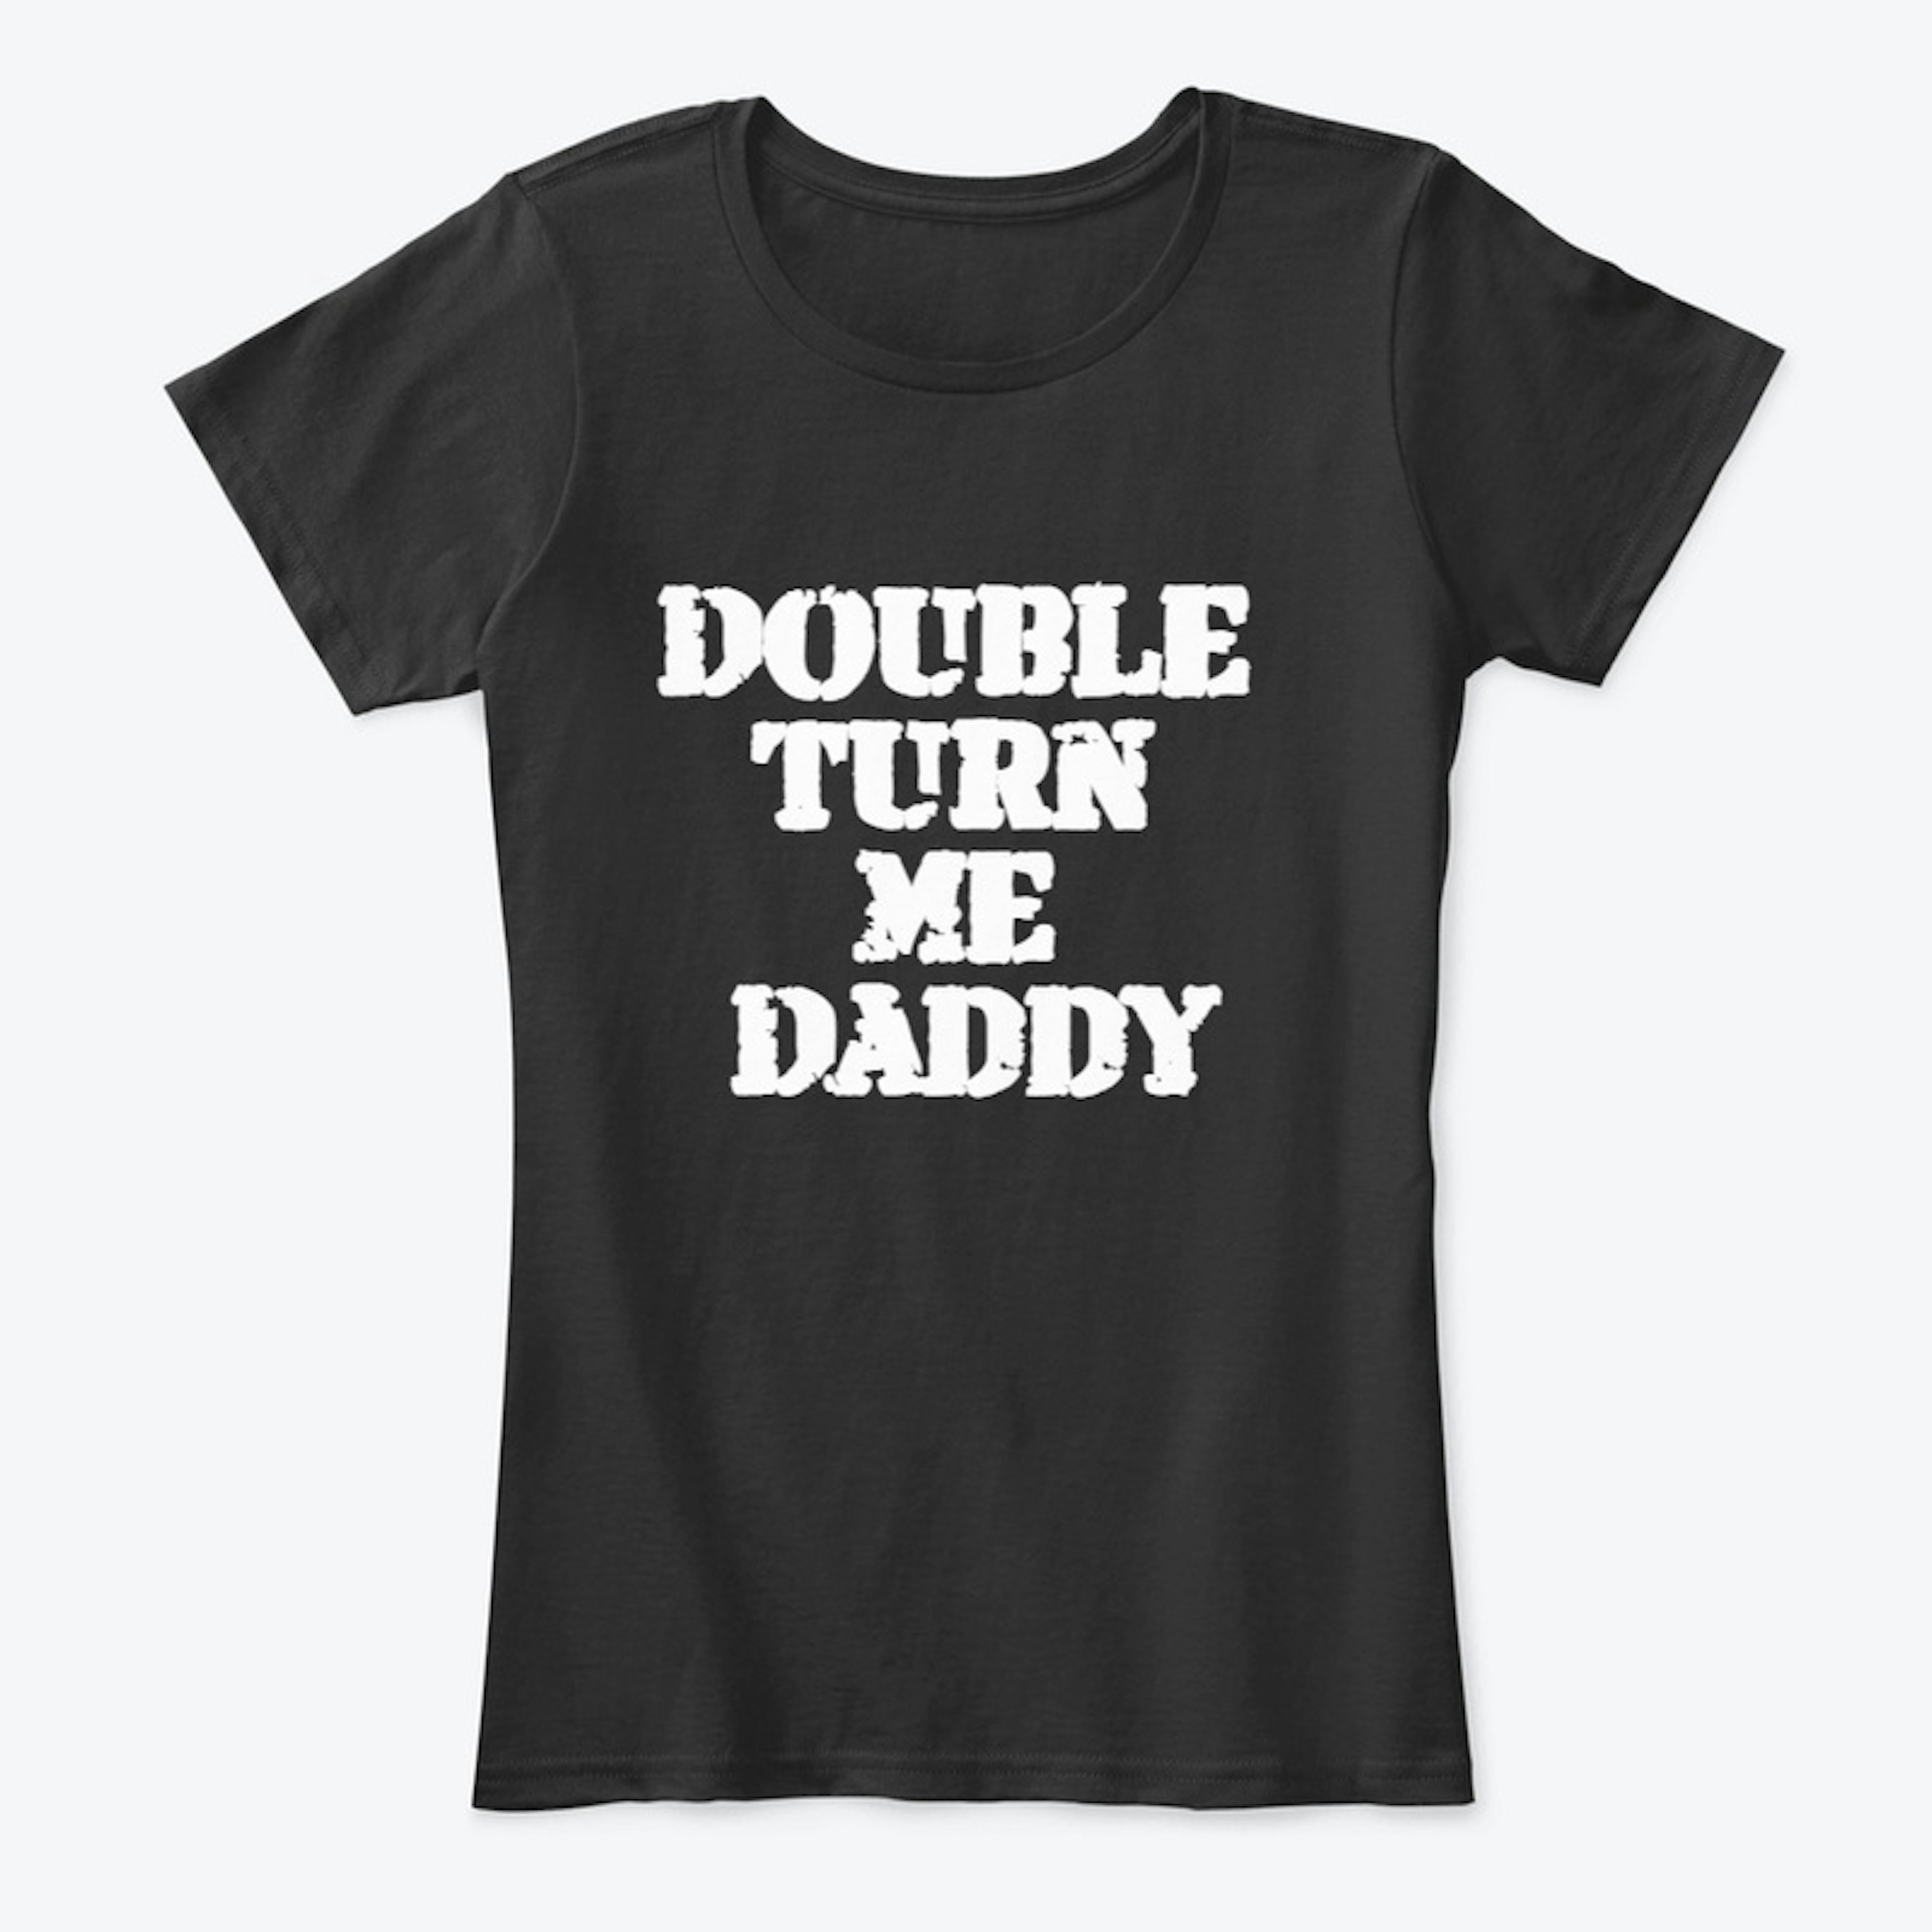 Double Turn me Daddy Tee